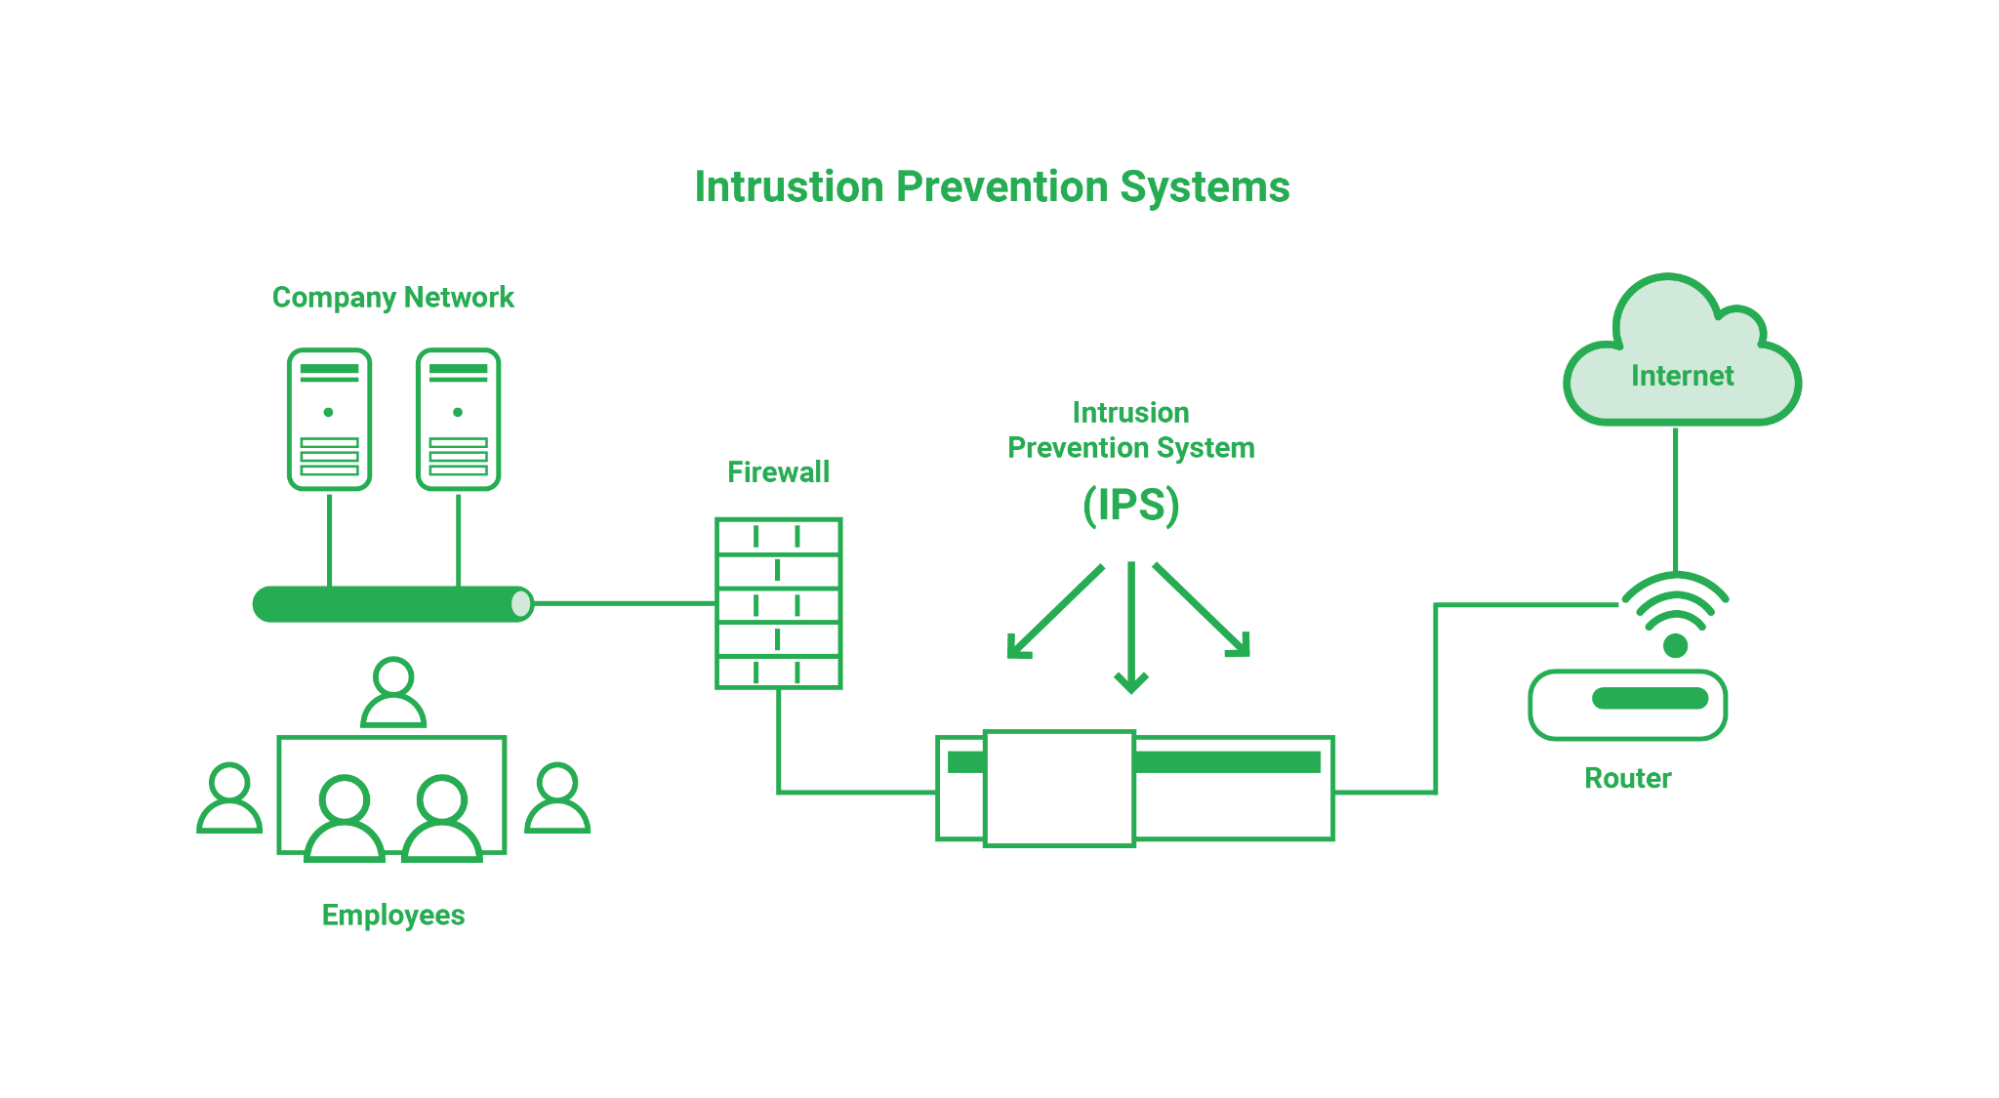 Intrusion Prevention System (IPS)